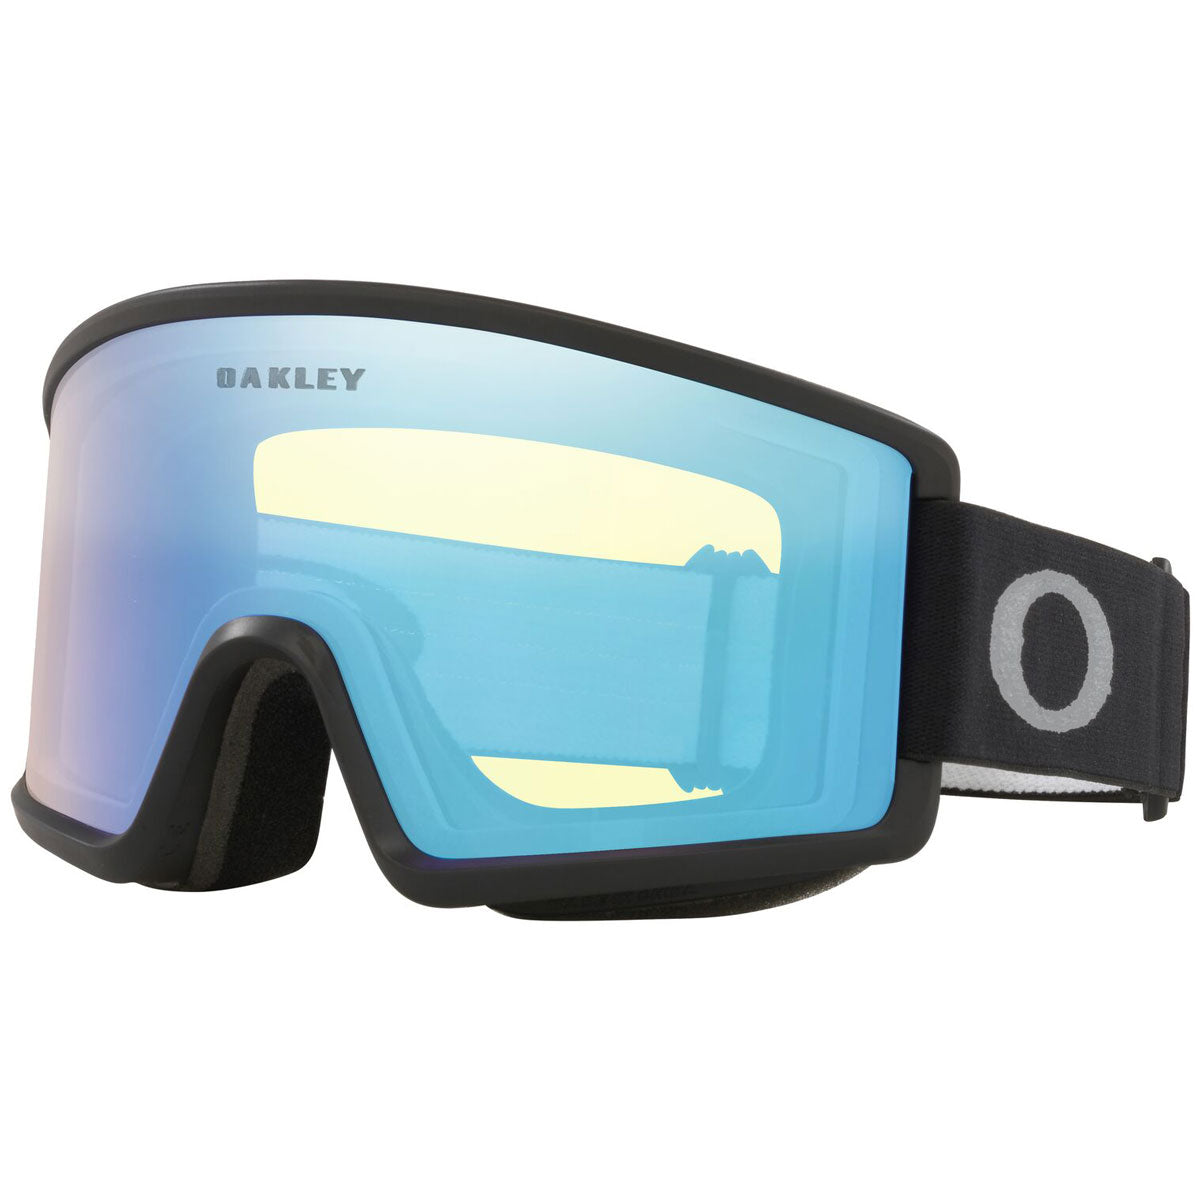 Oakley Target Line L Snowboard Goggles - Black/White/Yellow/Dark Grey image 1